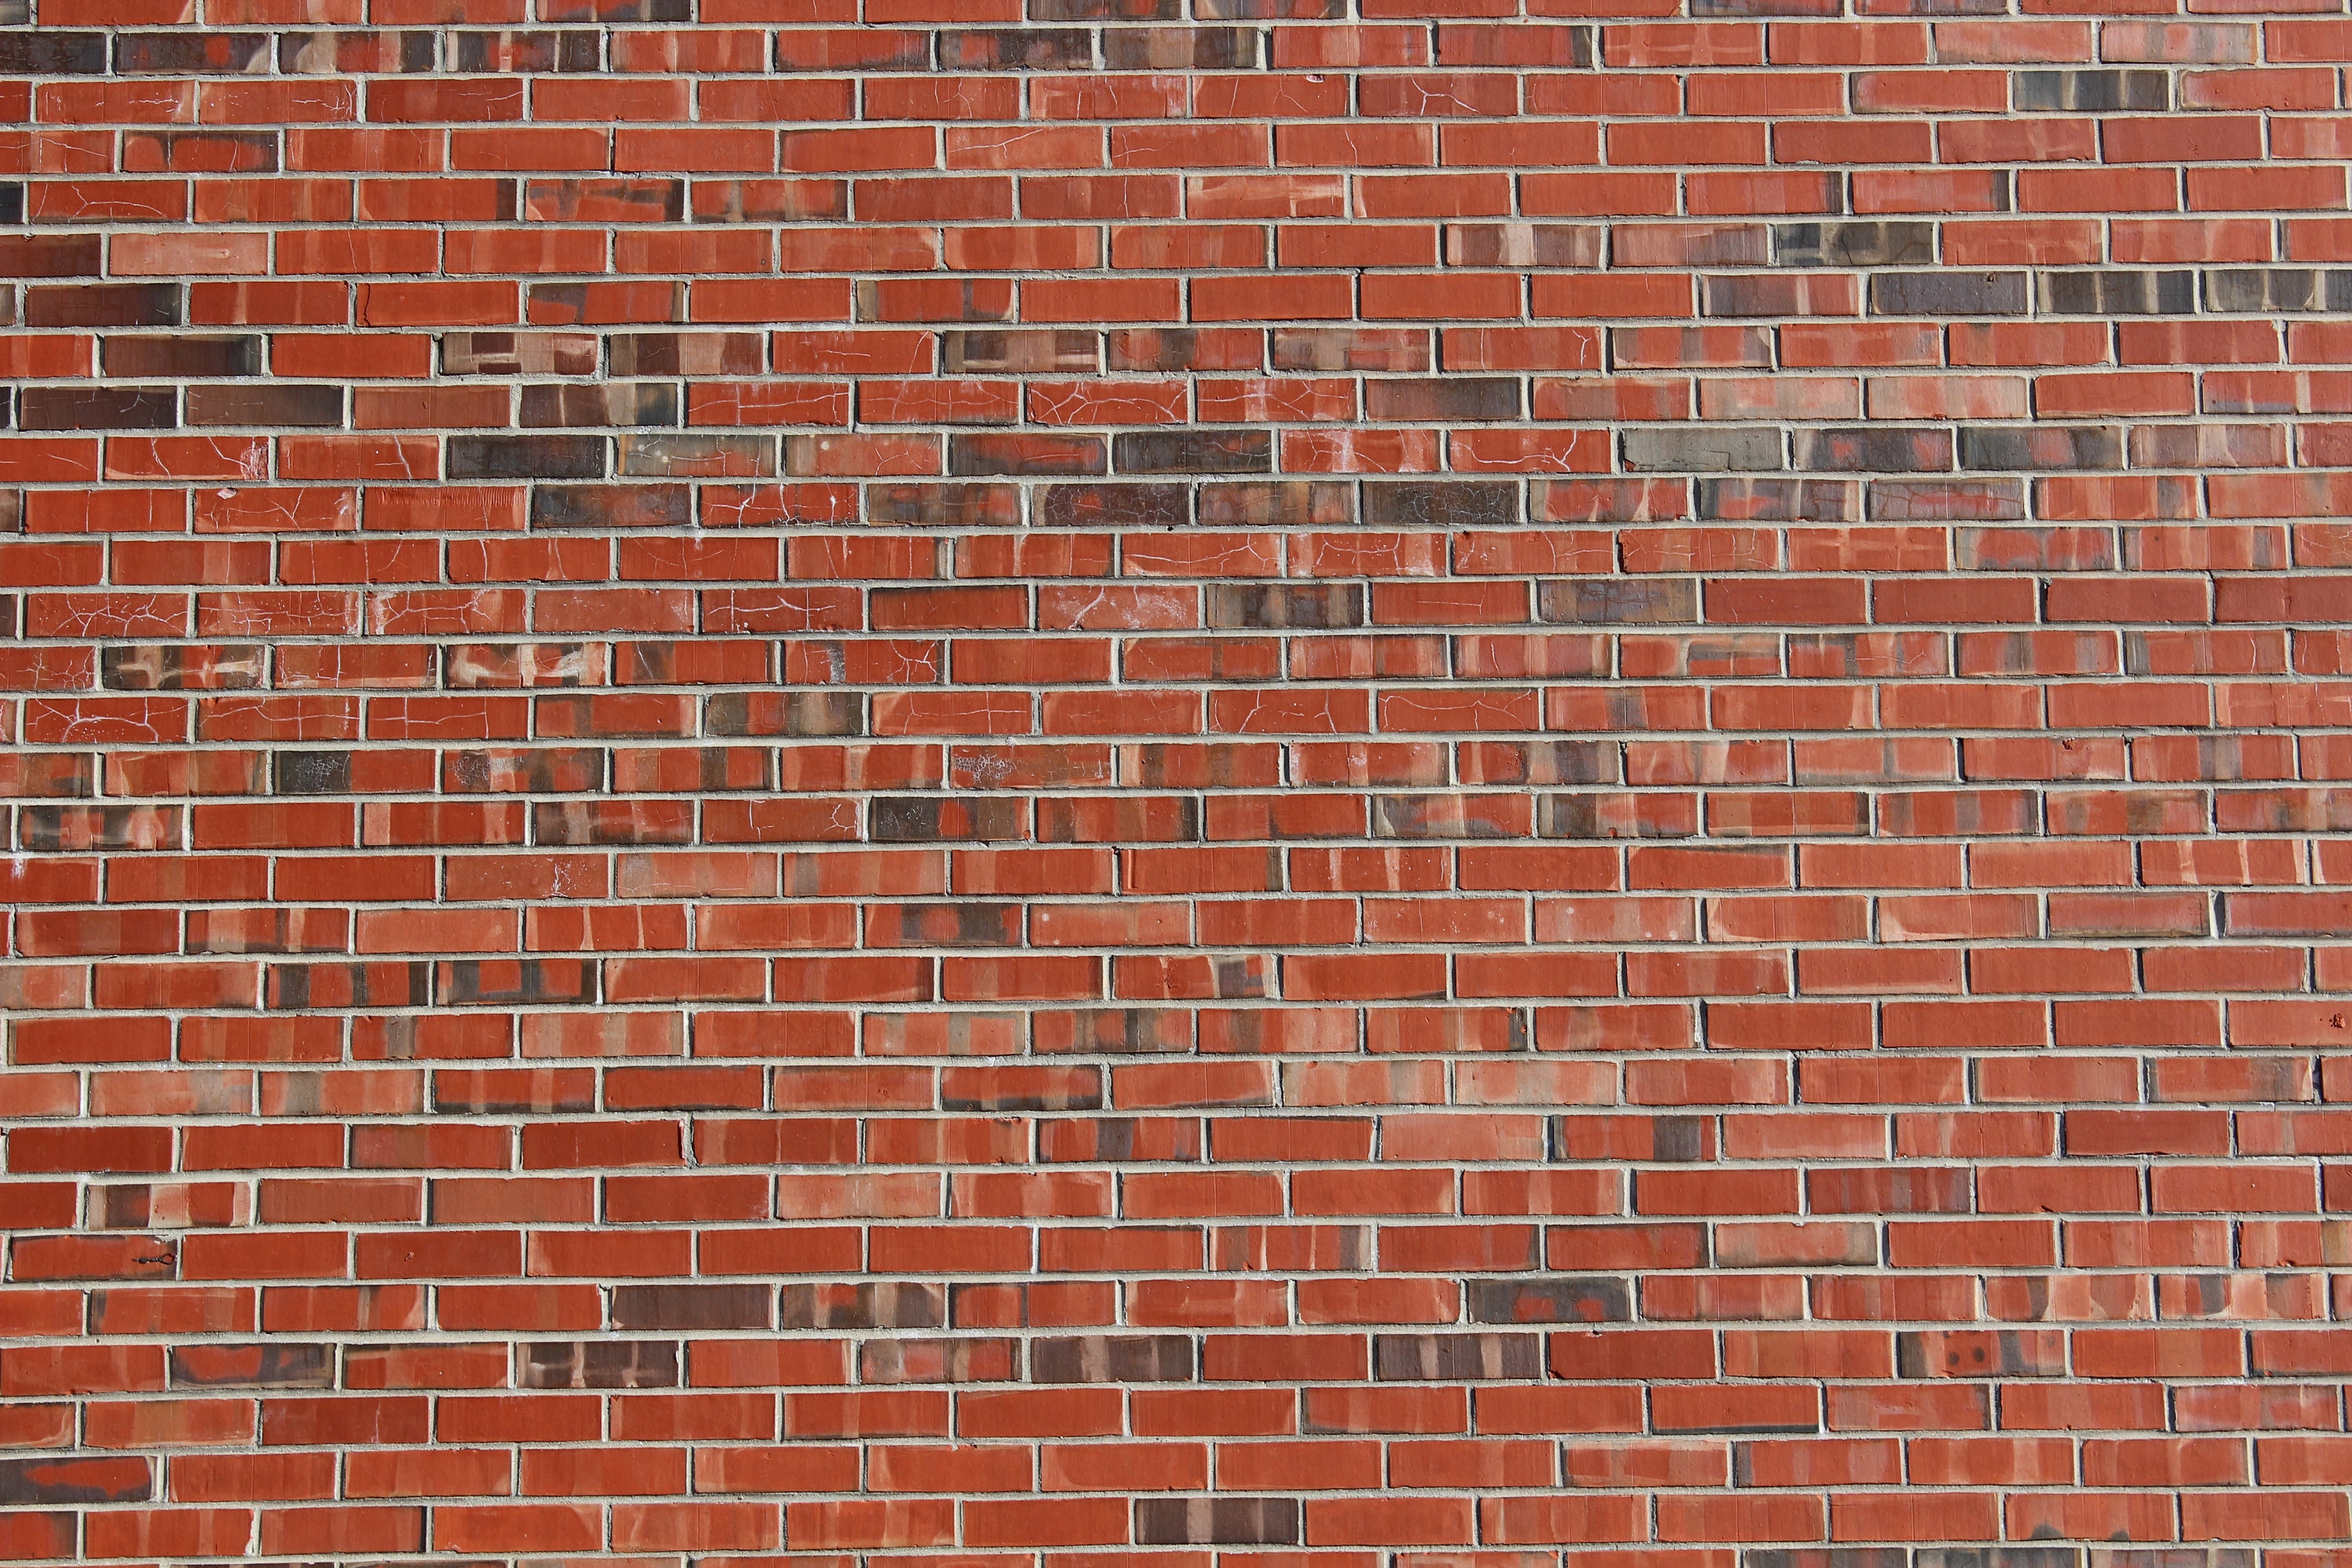 Design brick wall powerpoint templates